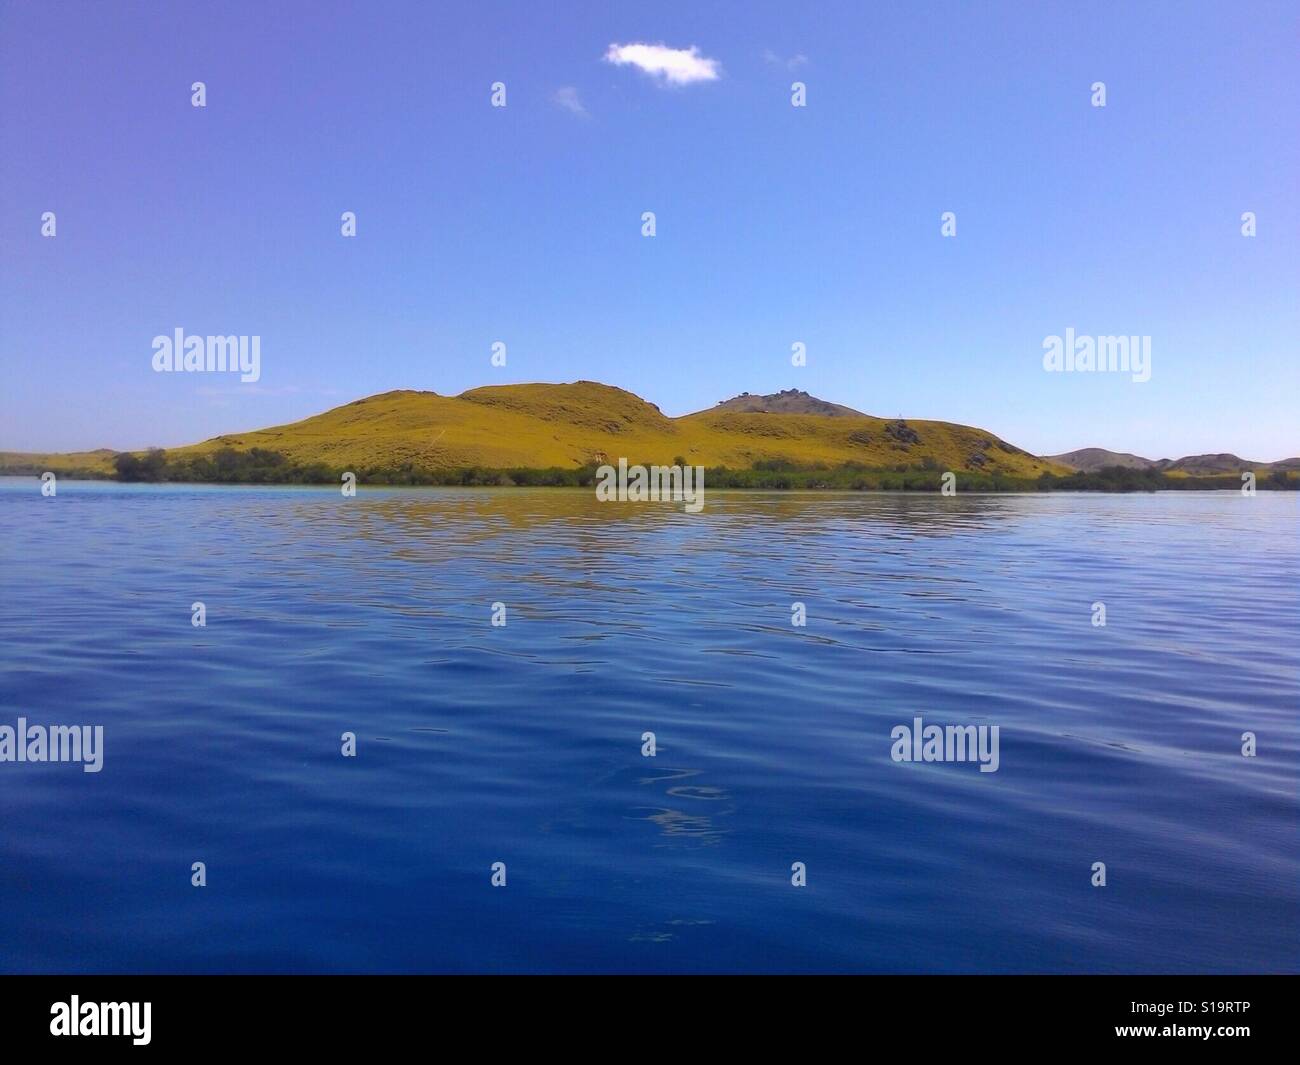 Komodo Islands Landscape From Ocean in Flores Sea Stock Photo